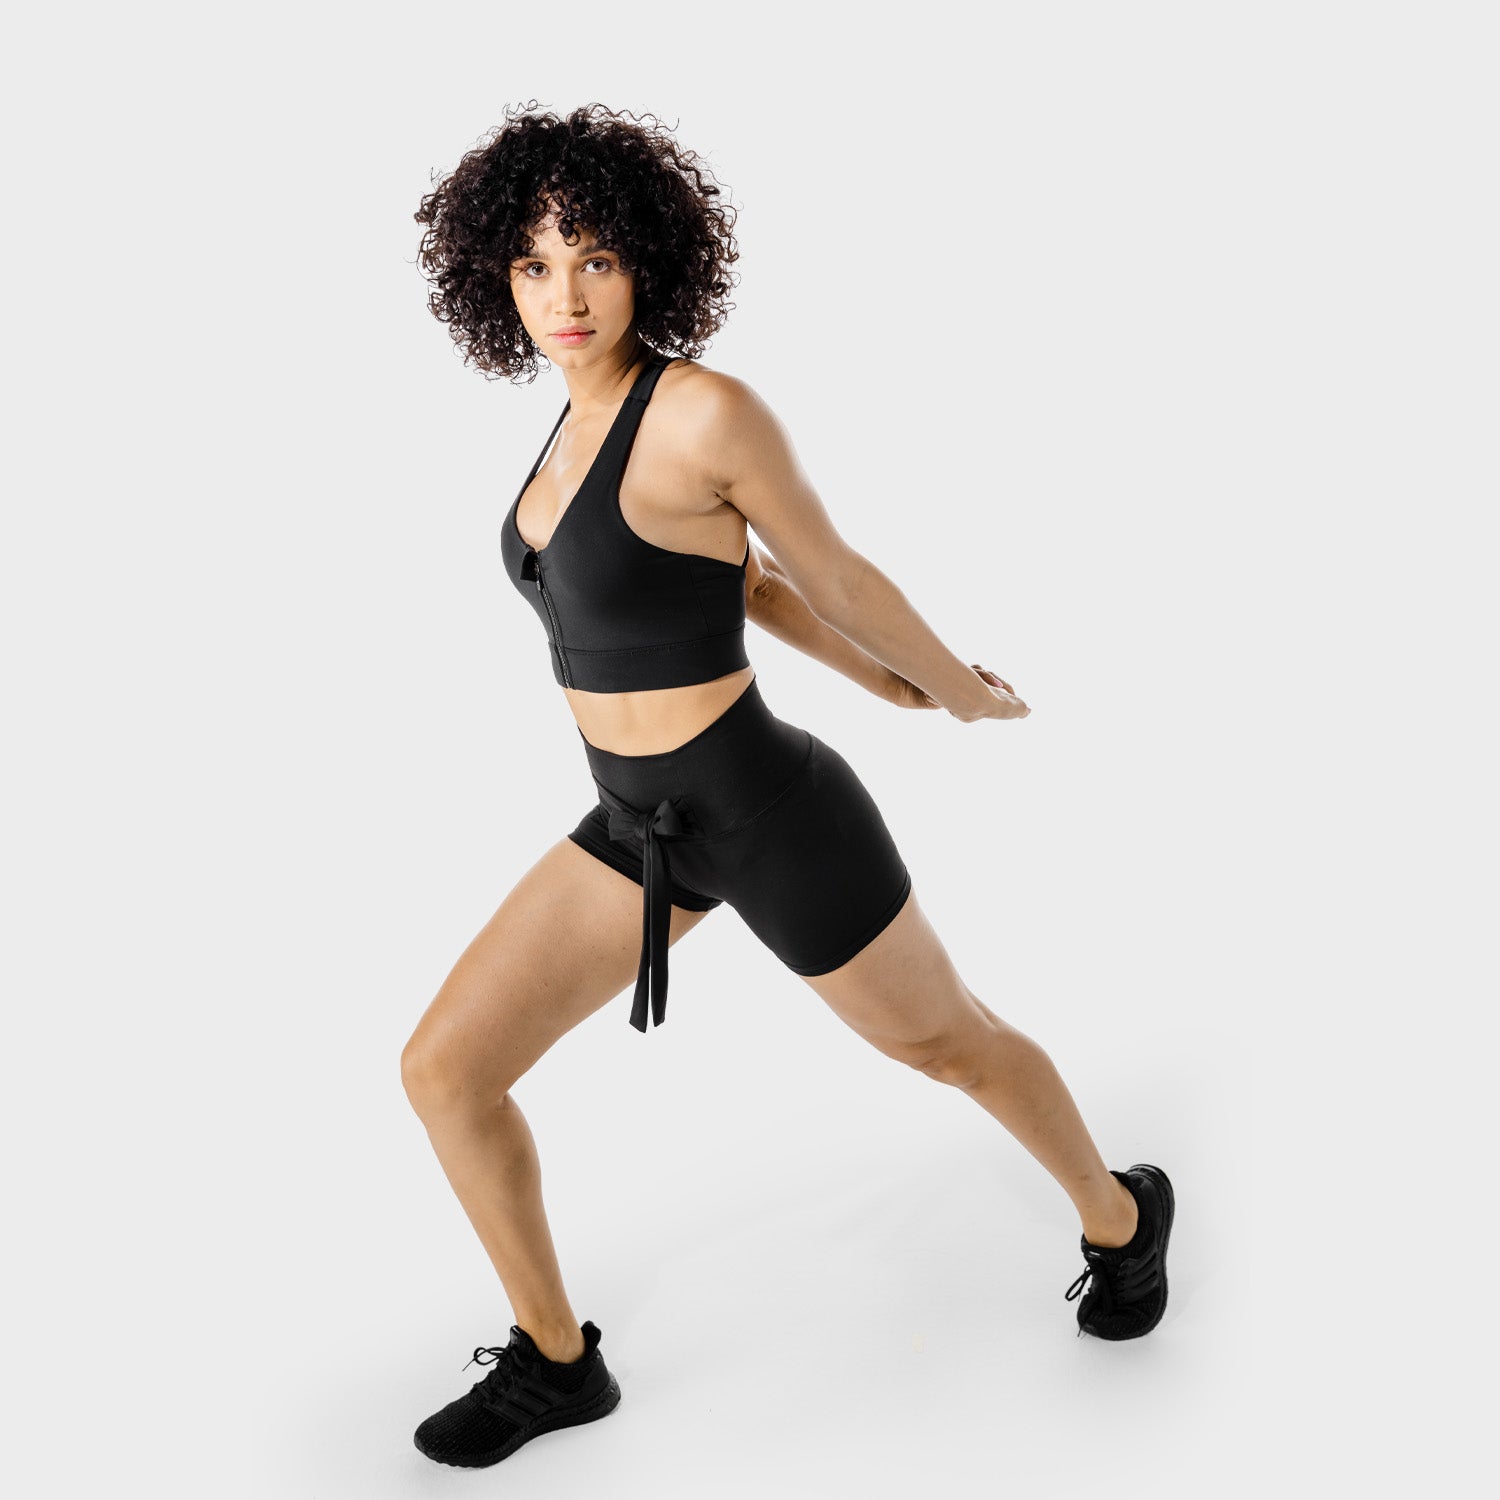 AE, Women's Fitness - Tie Shorts - Black, Workout Shorts Women